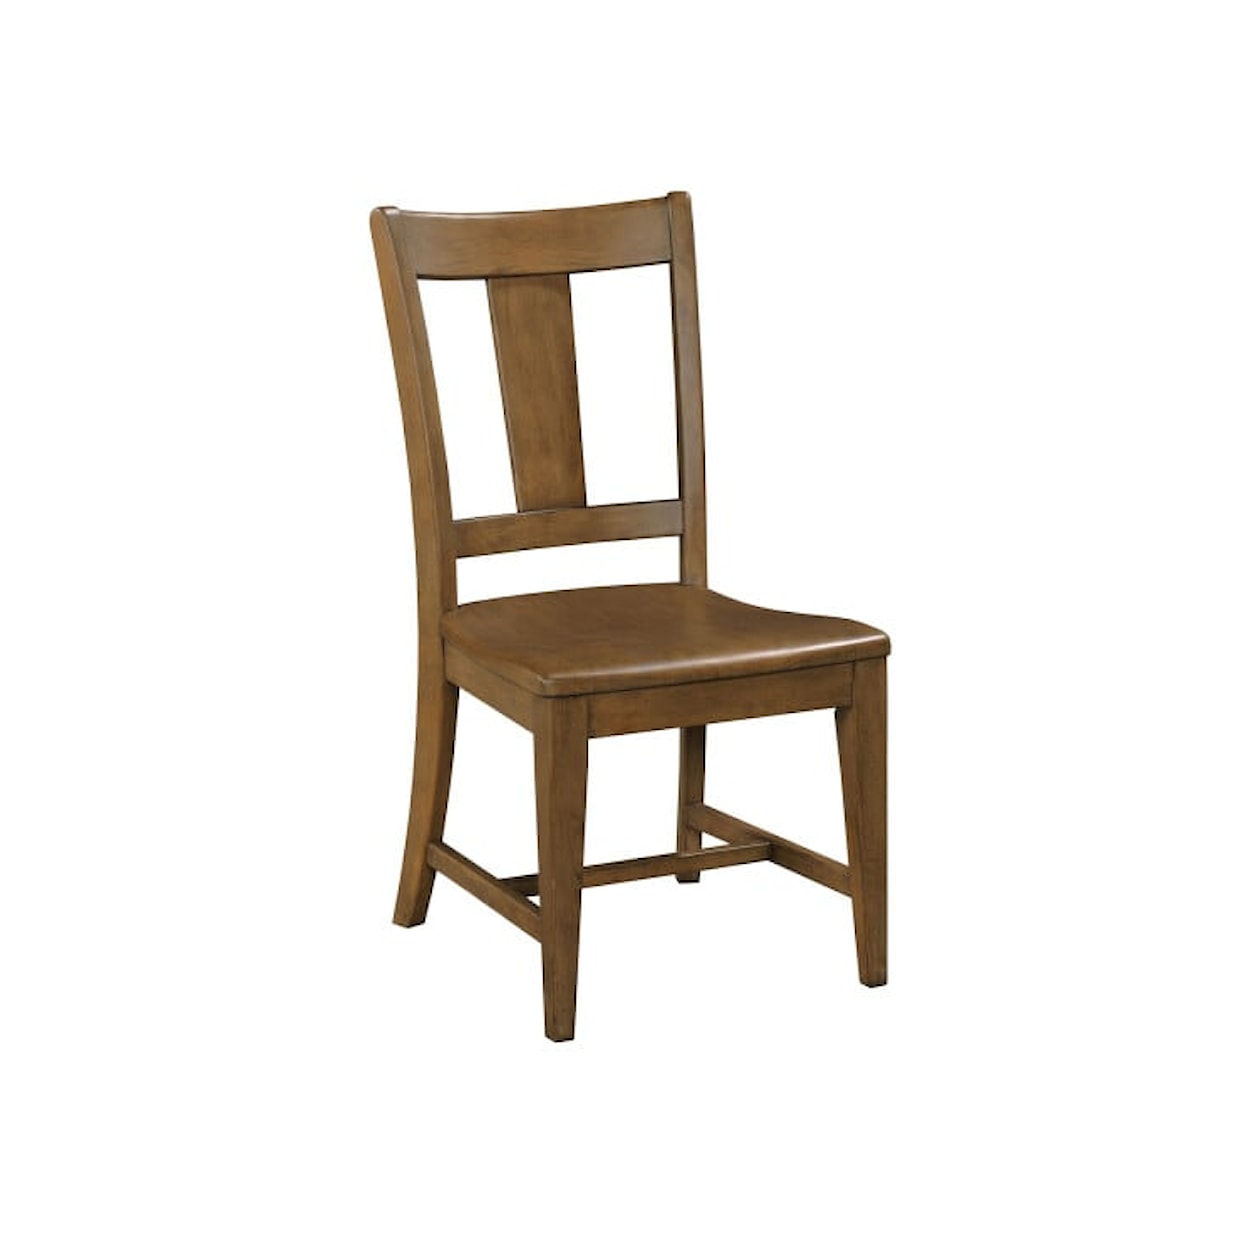 Kincaid Furniture Kafe' Splat Back Chair, Latte